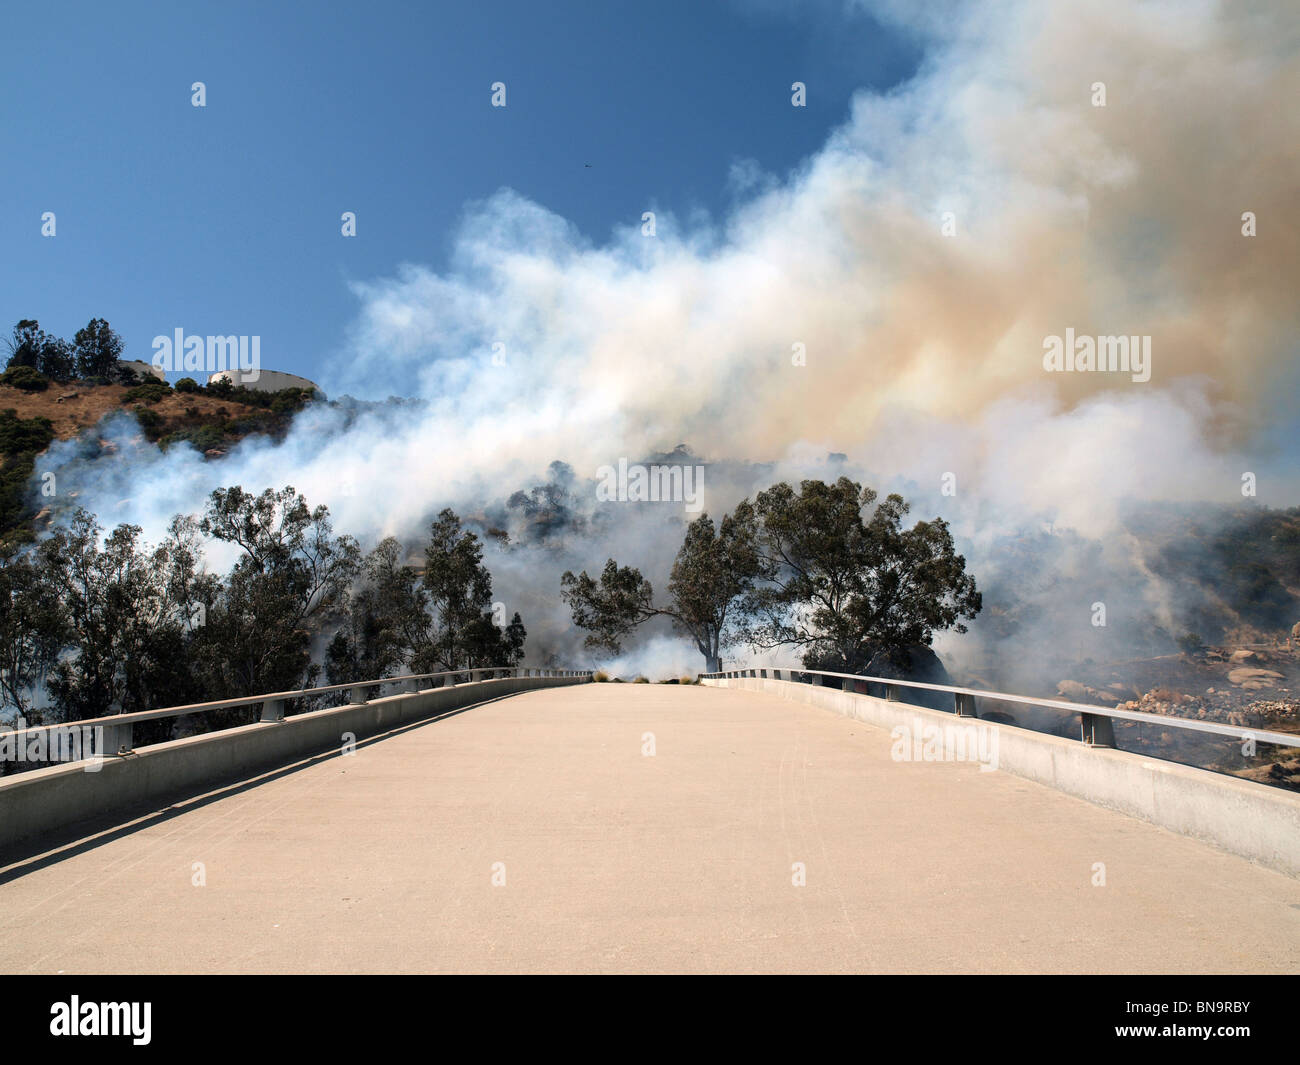 CHATSWORTH CALIFORNIA - 8 juillet 2010 : un feu de broussailles burns le long de la Freeway 118. Banque D'Images